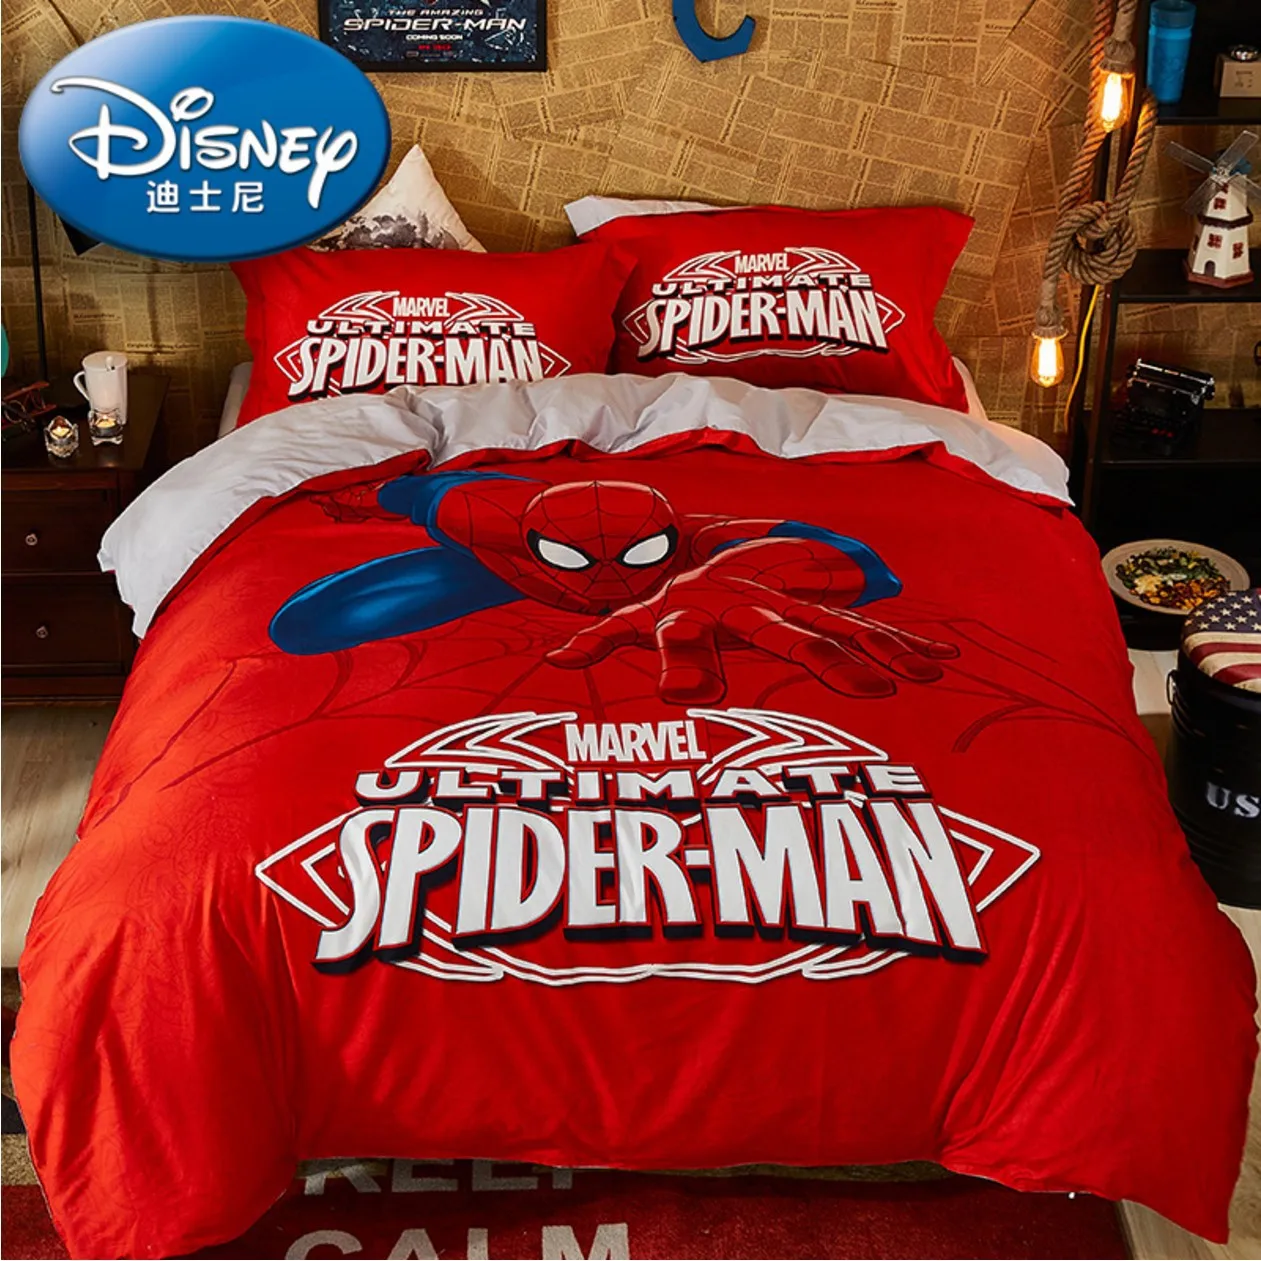 3PC-SET New Cartoon Animation Children's Bedding Spider-Man Student Dormitory Pillowcases Quilt Cover Children's Best Gift